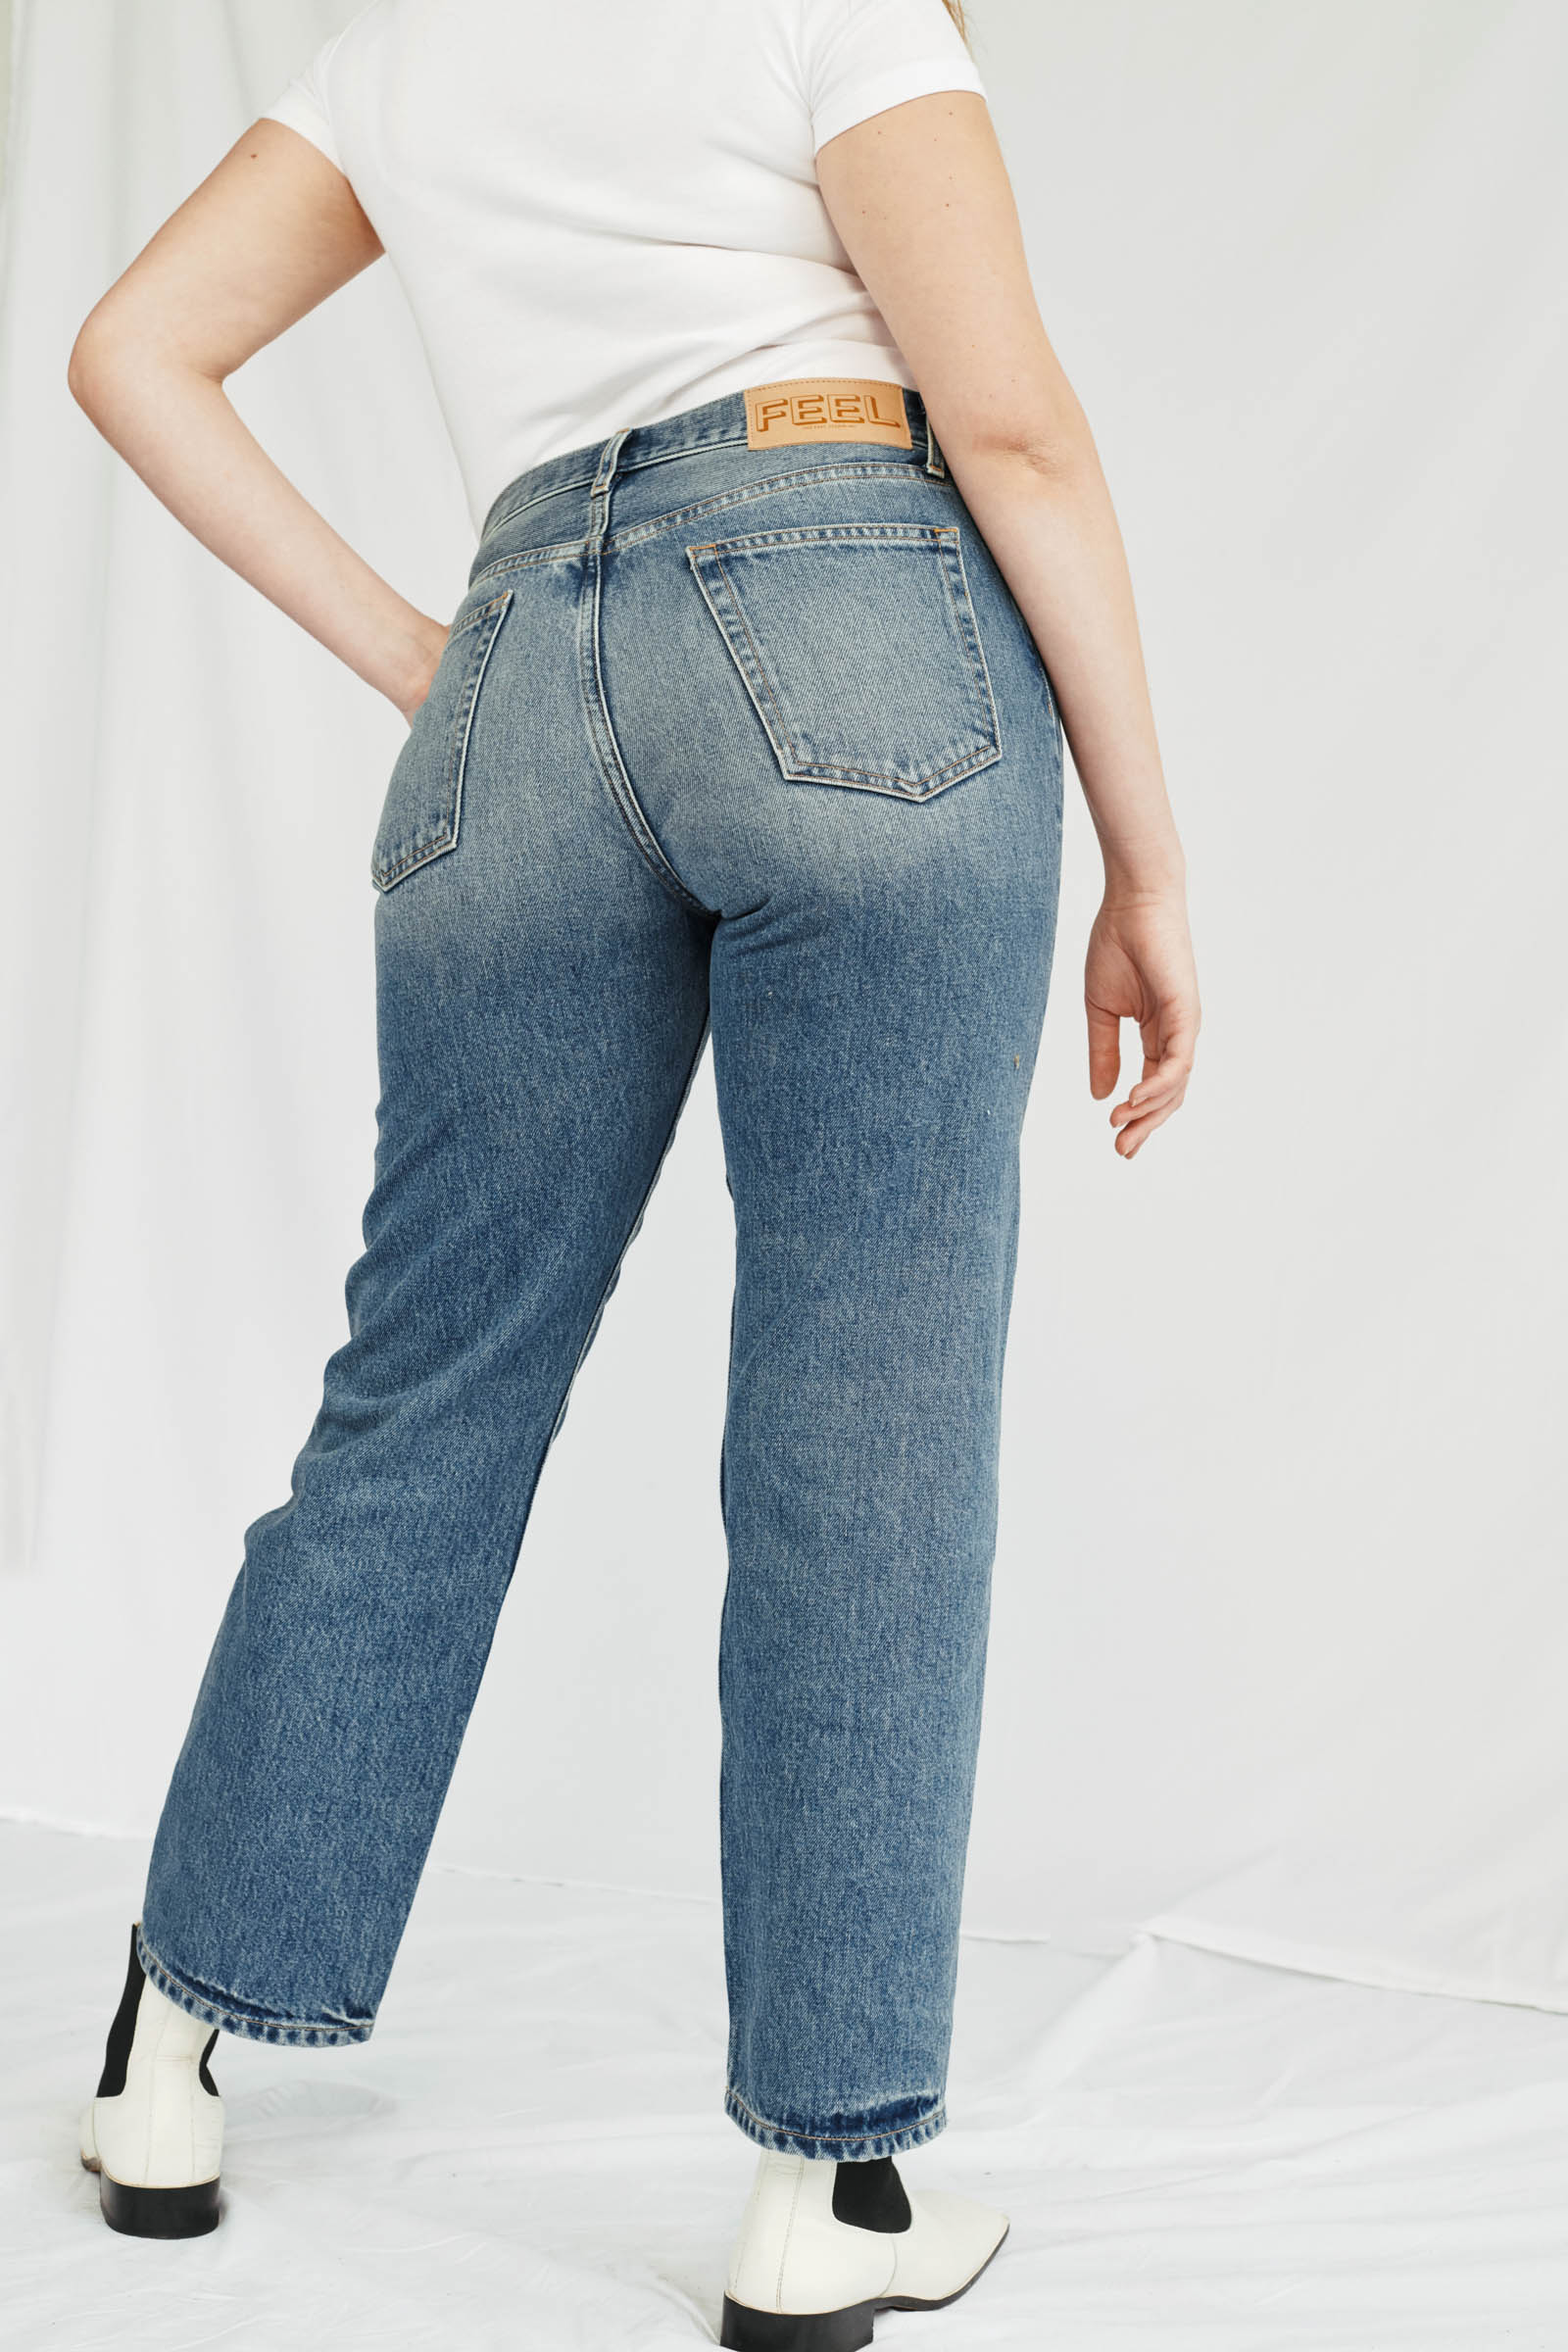 the feel studio jeans